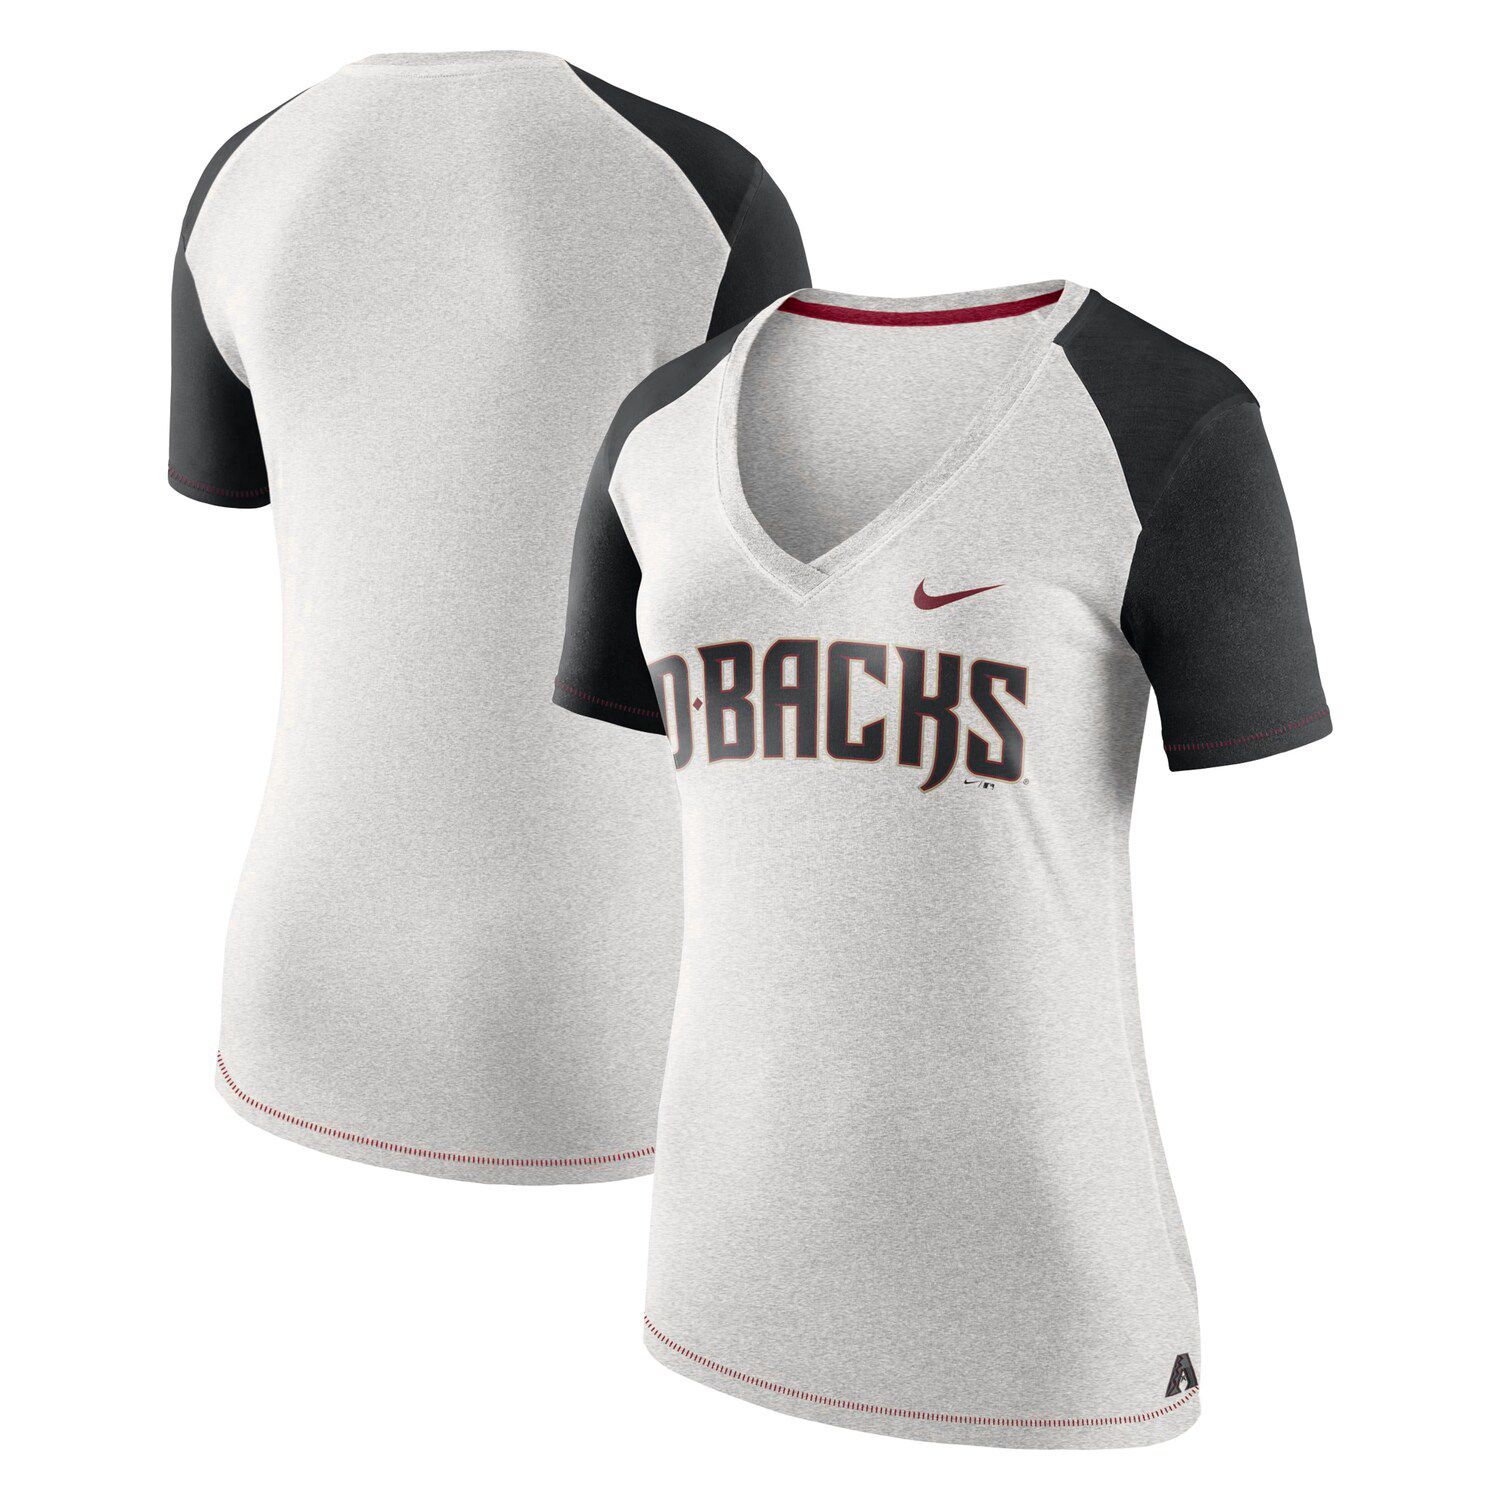 arizona diamondbacks women's jersey